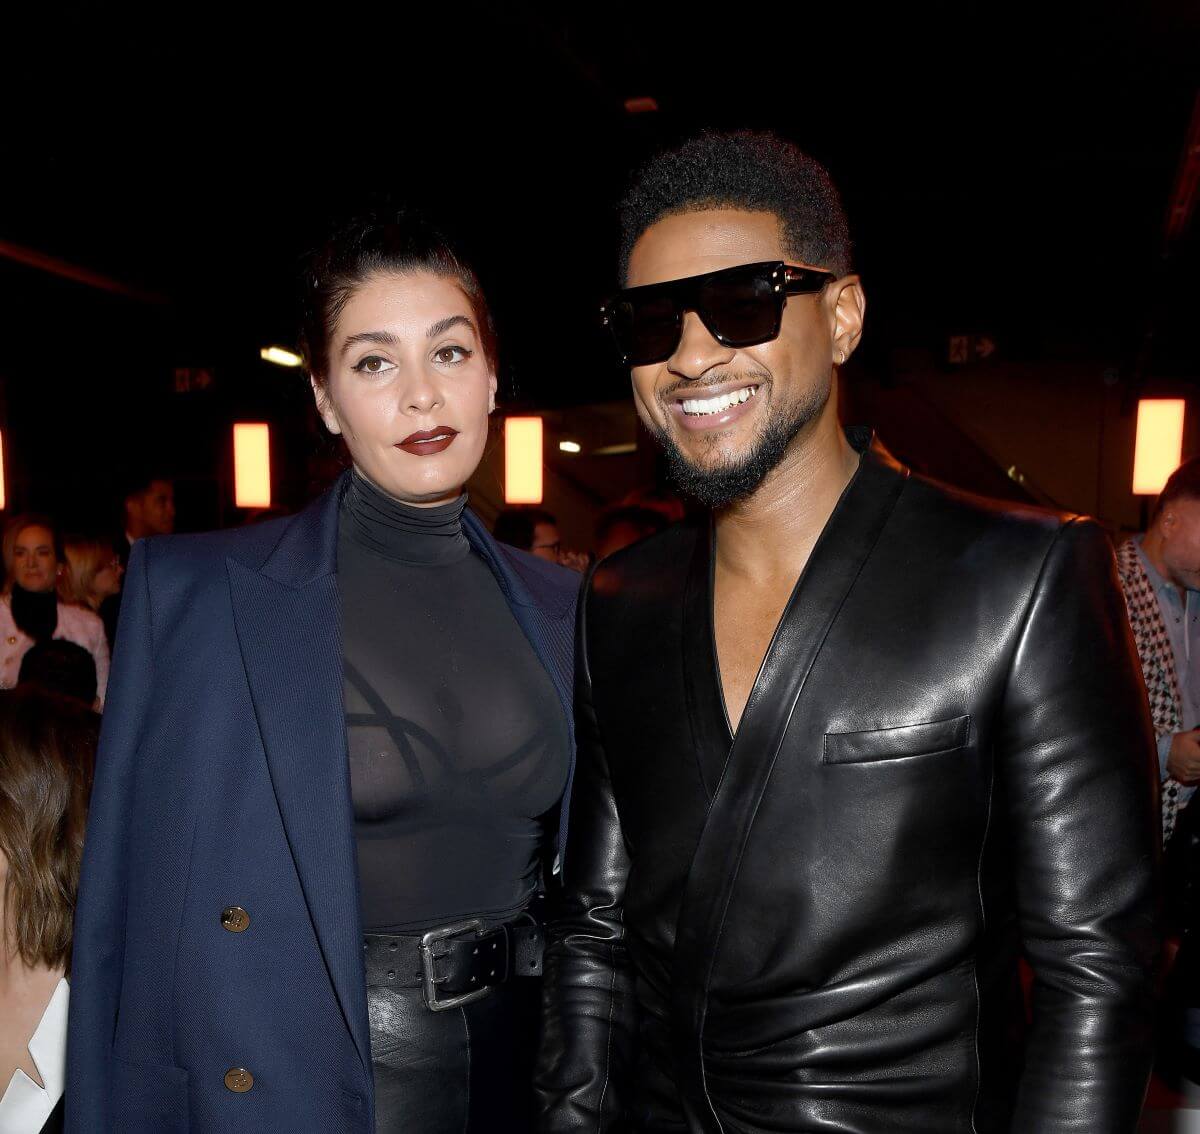 Jenn Goicoechea wears a navy blue blazer and stands next to Usher, who wears a black jacket and sunglasses.